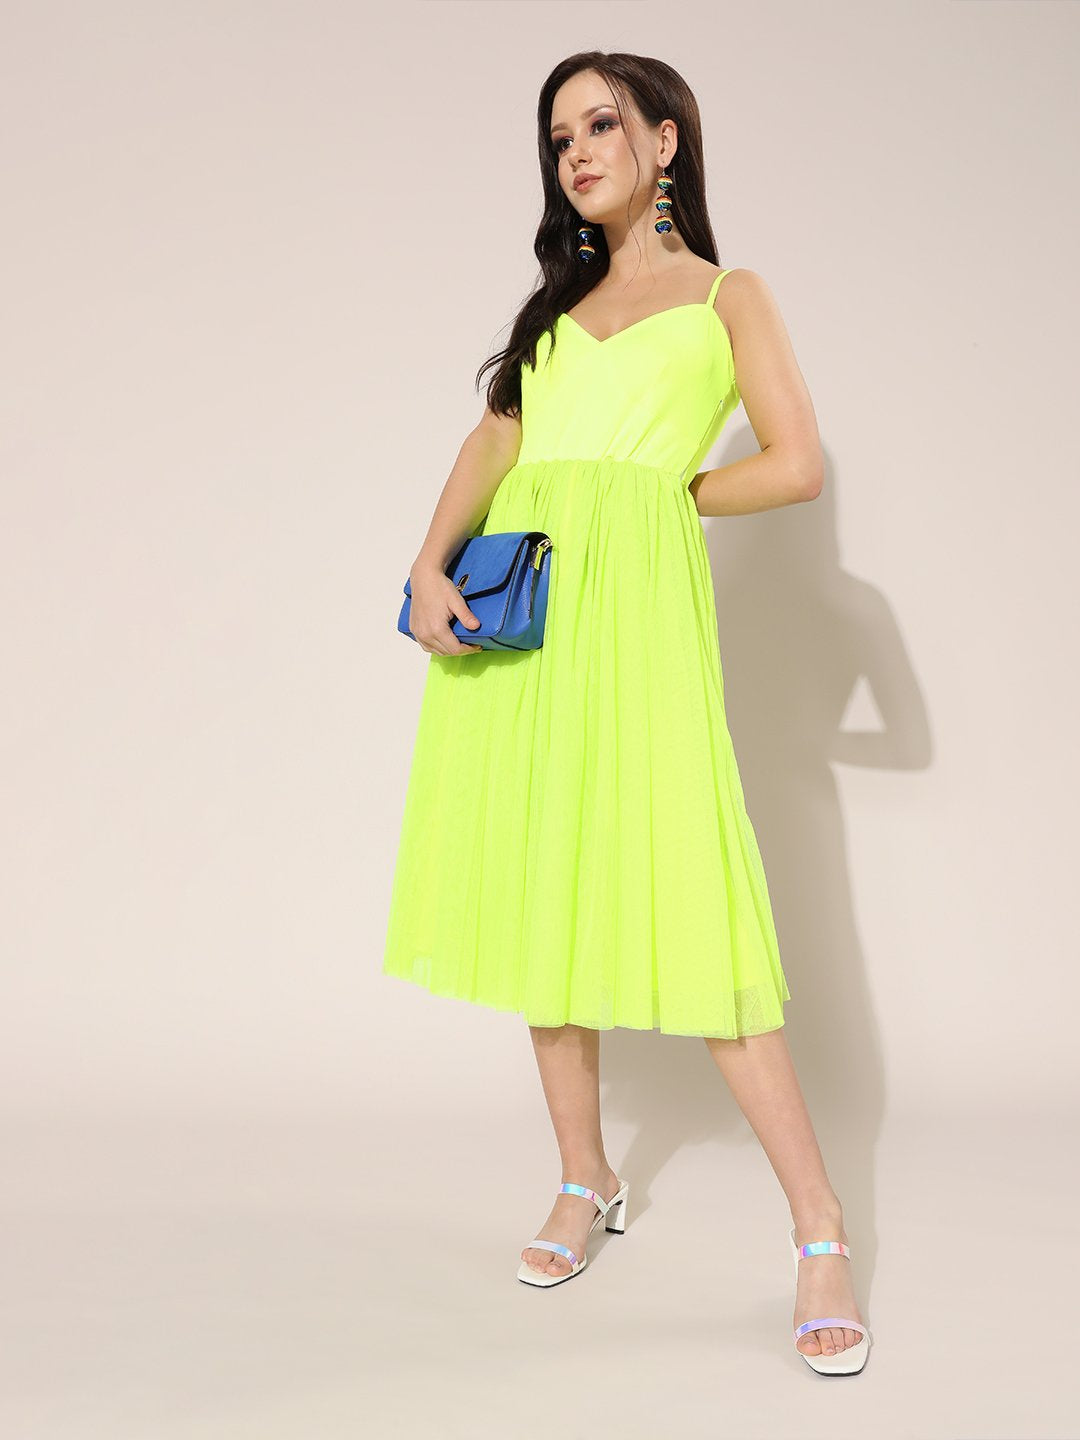 SCORPIUS Neon Tulle Dress